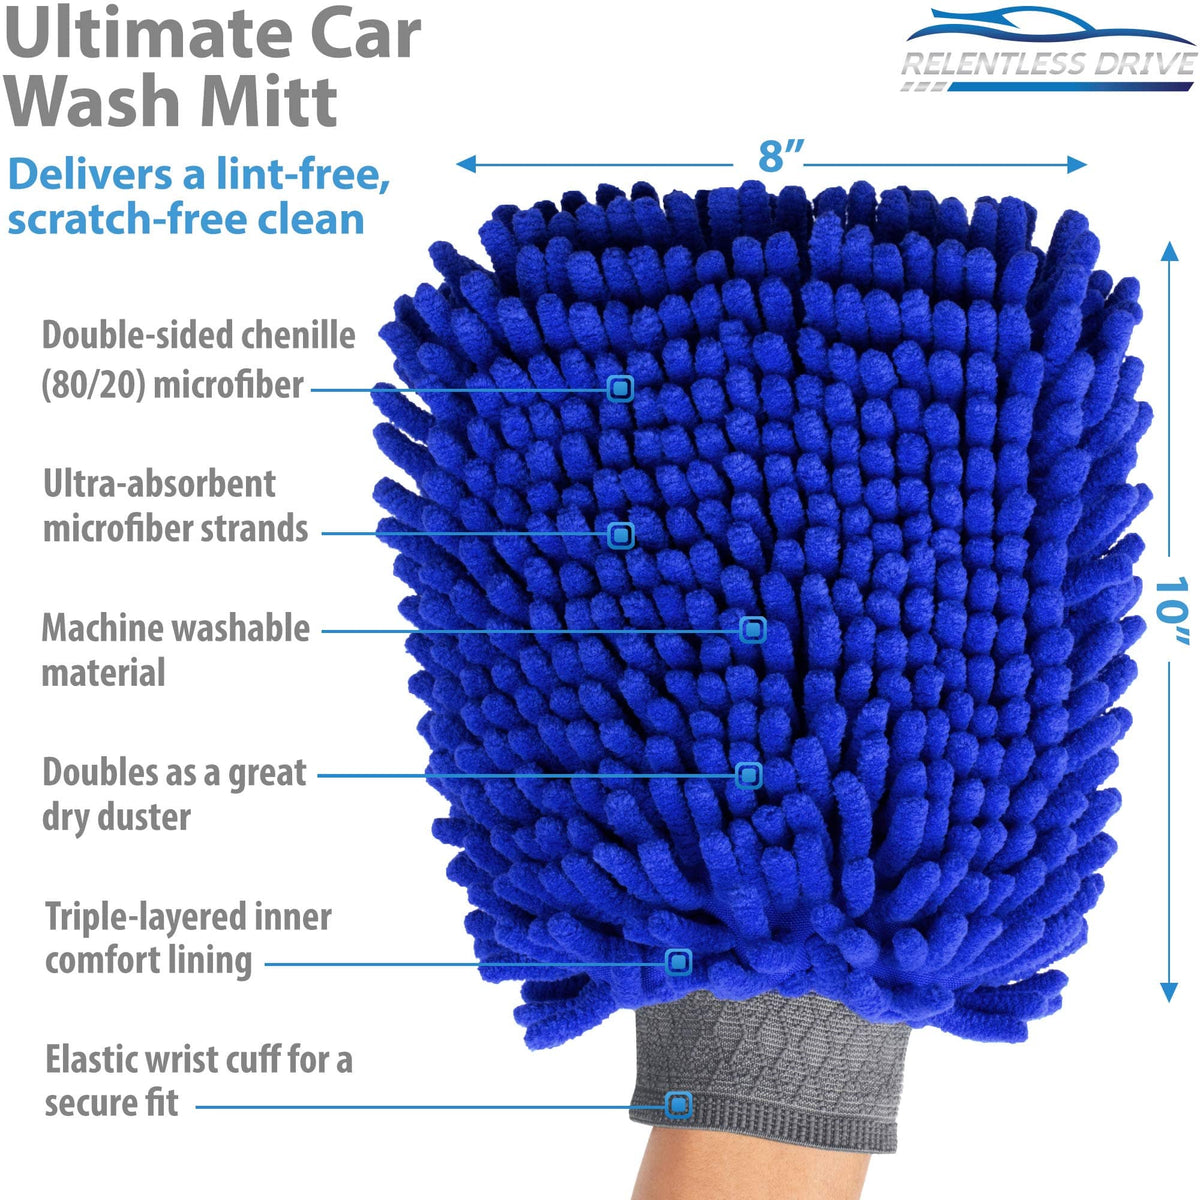 Relentless Drive Car Wash Soap Kit (Gallon) - PH Neutral Foam Cannon C